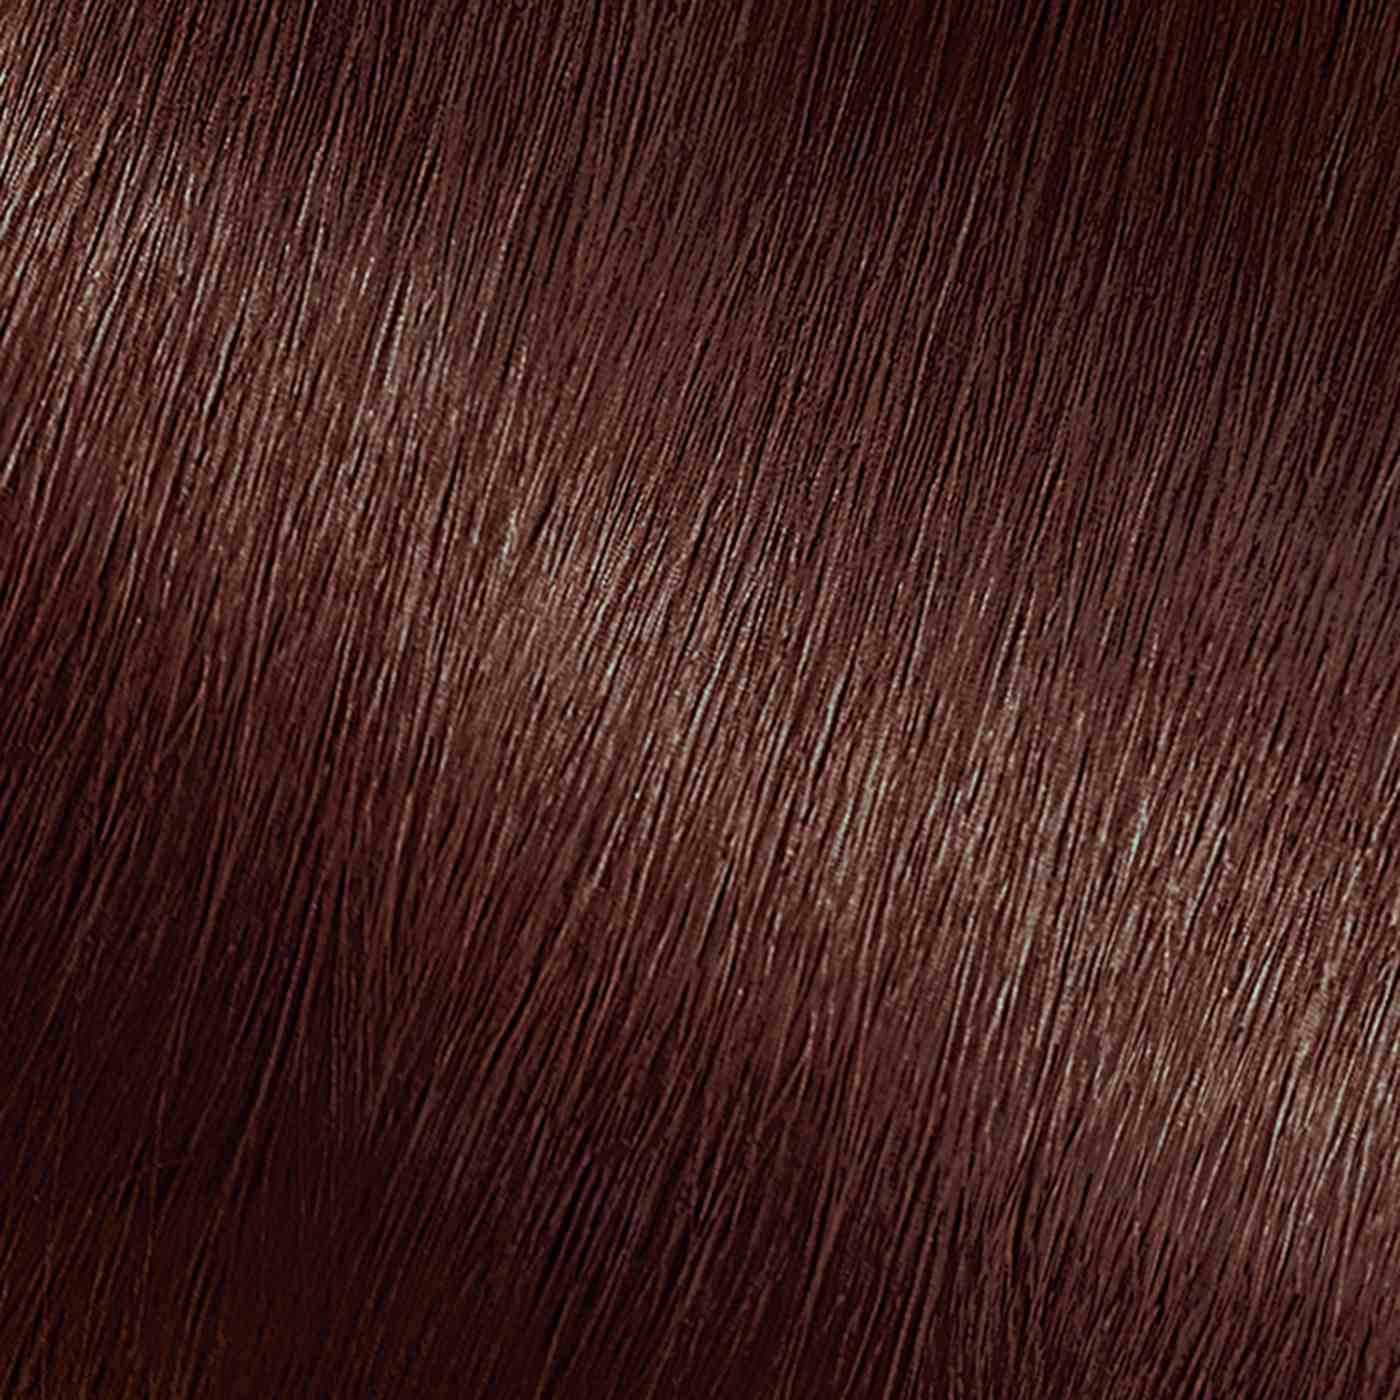 Garnier Nutrisse Nourishing Hair Color Creme - 415 Soft Mahogany Drk Brown (Raspberry Truffle); image 14 of 16